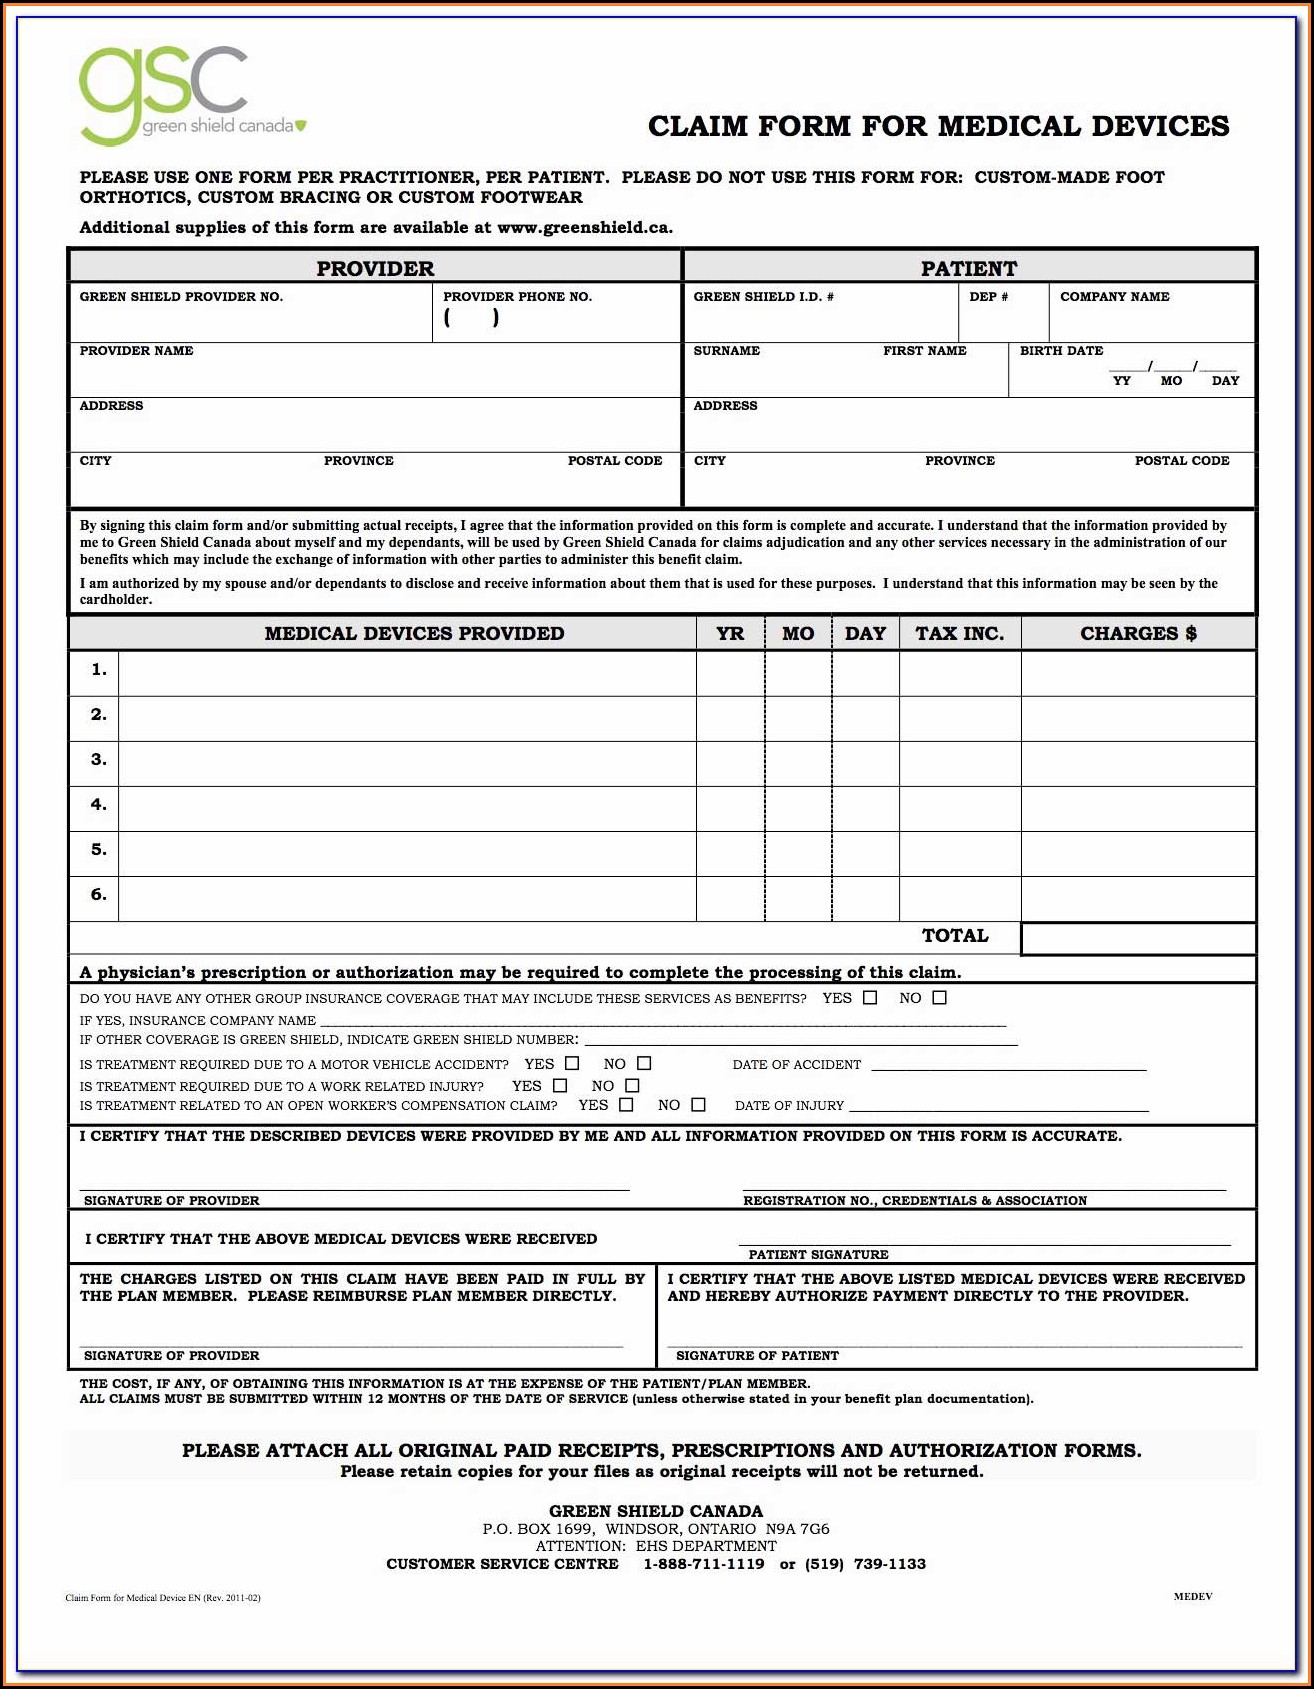 tata-aig-accidental-insurance-claim-form-form-resume-examples